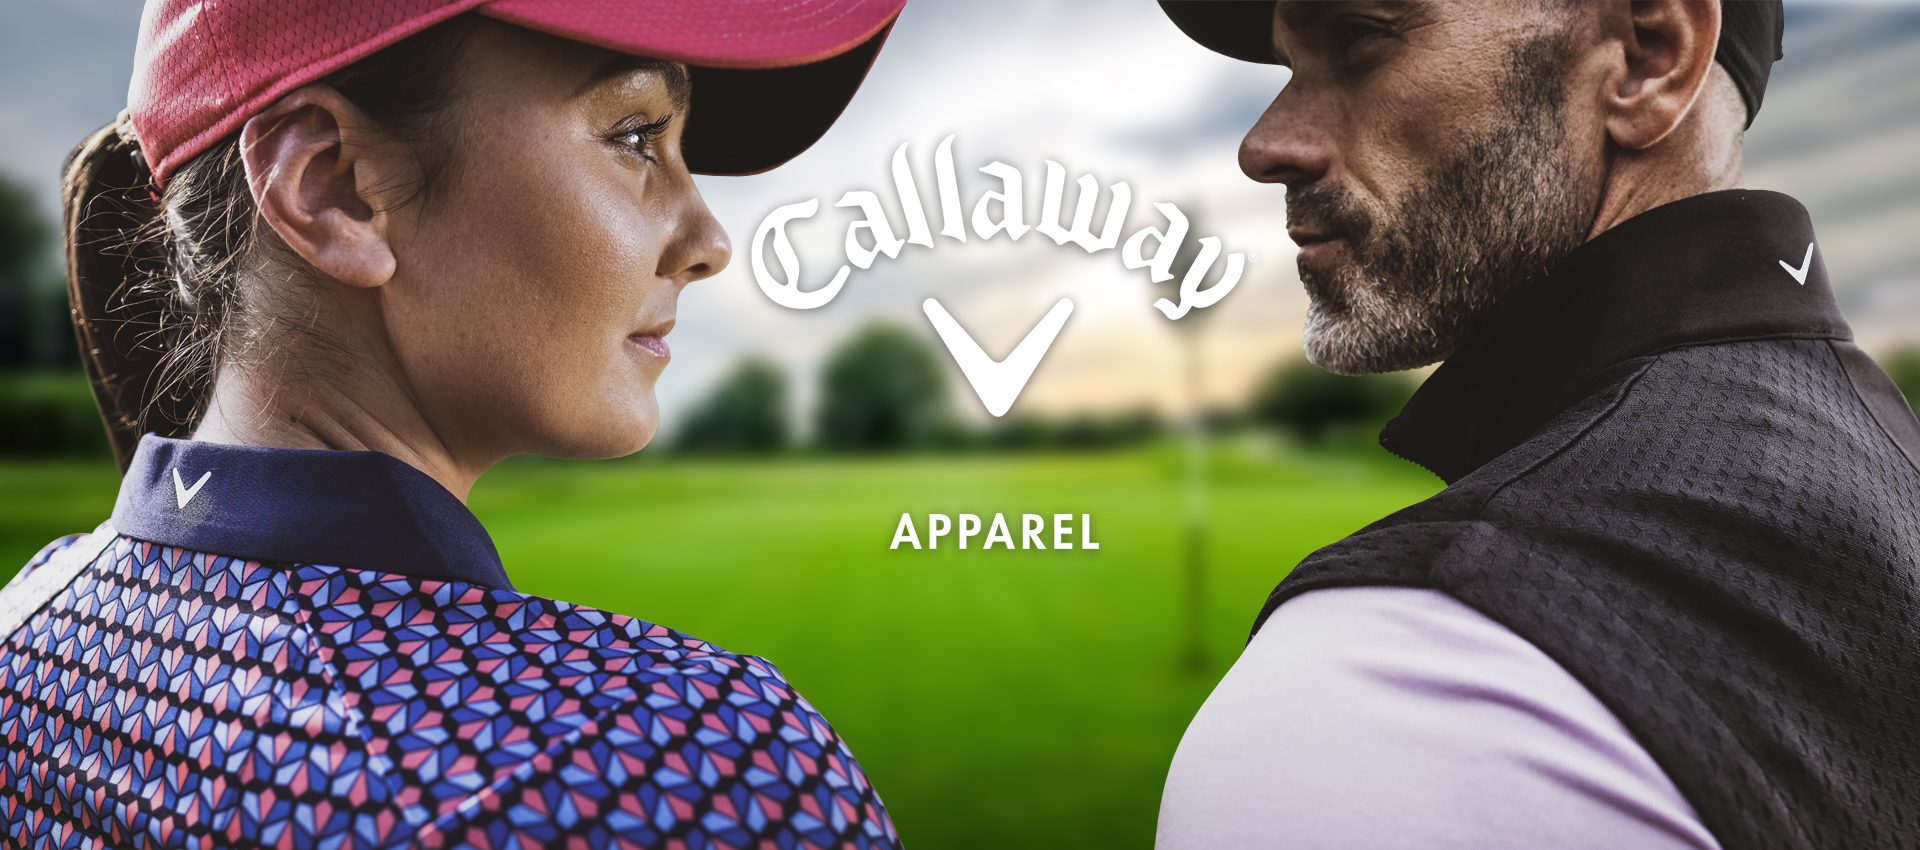 Callaway-apparel-holiday-golf-distributor-spain-portugal-banner-web